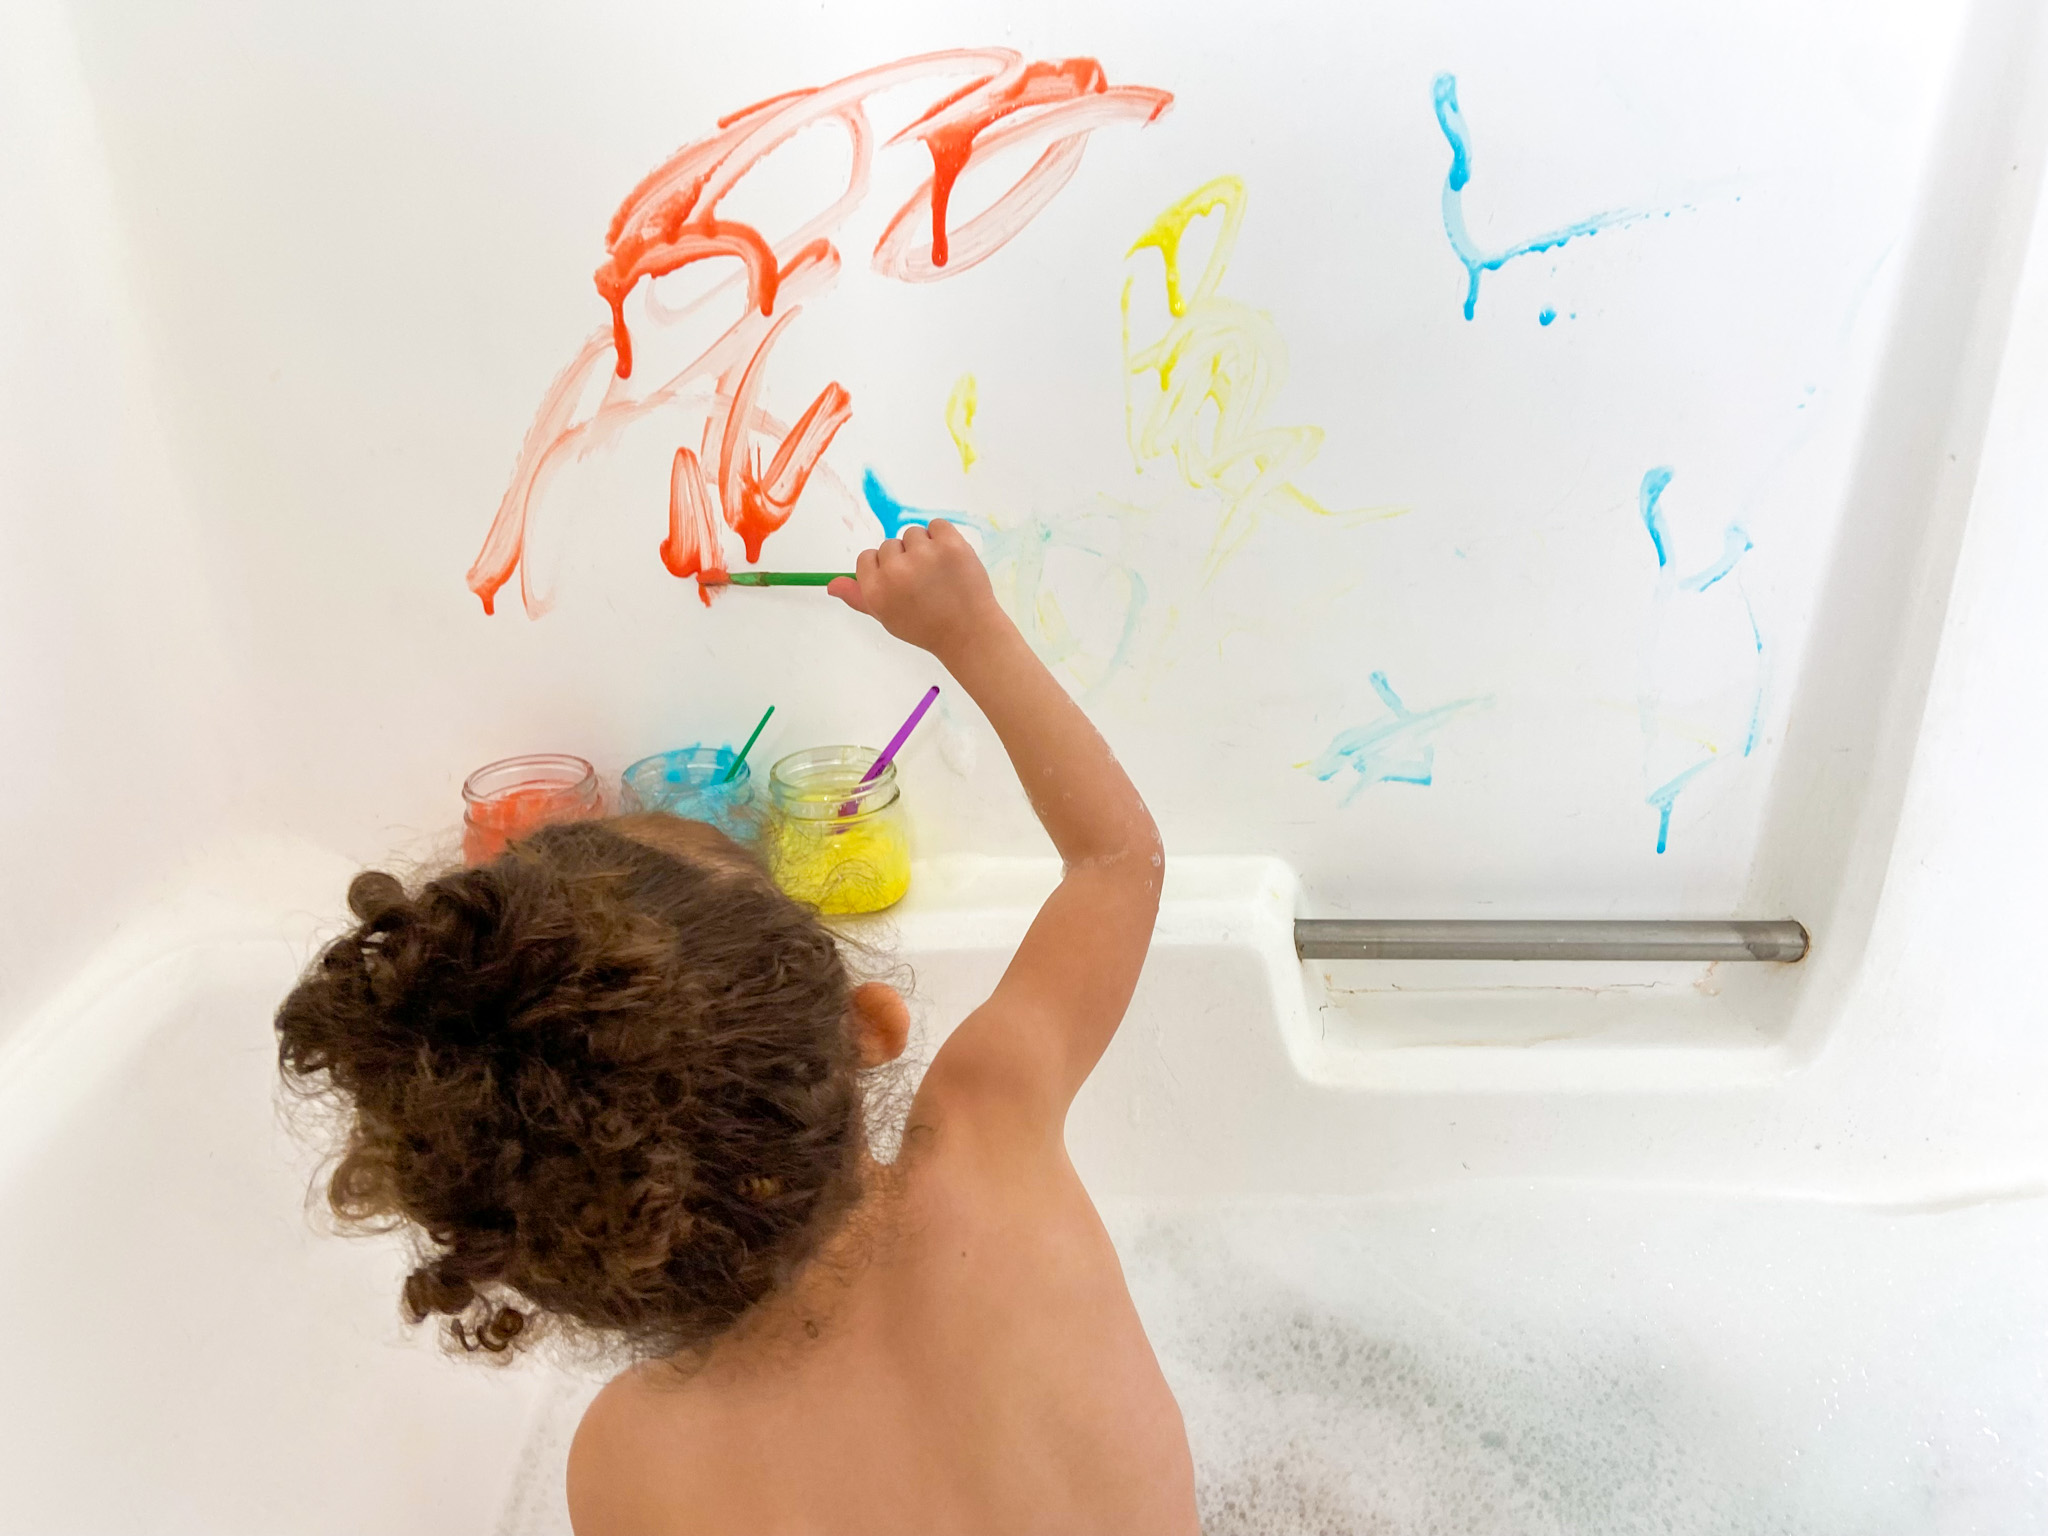 Homemade Bath Paints - Messy Little Monster